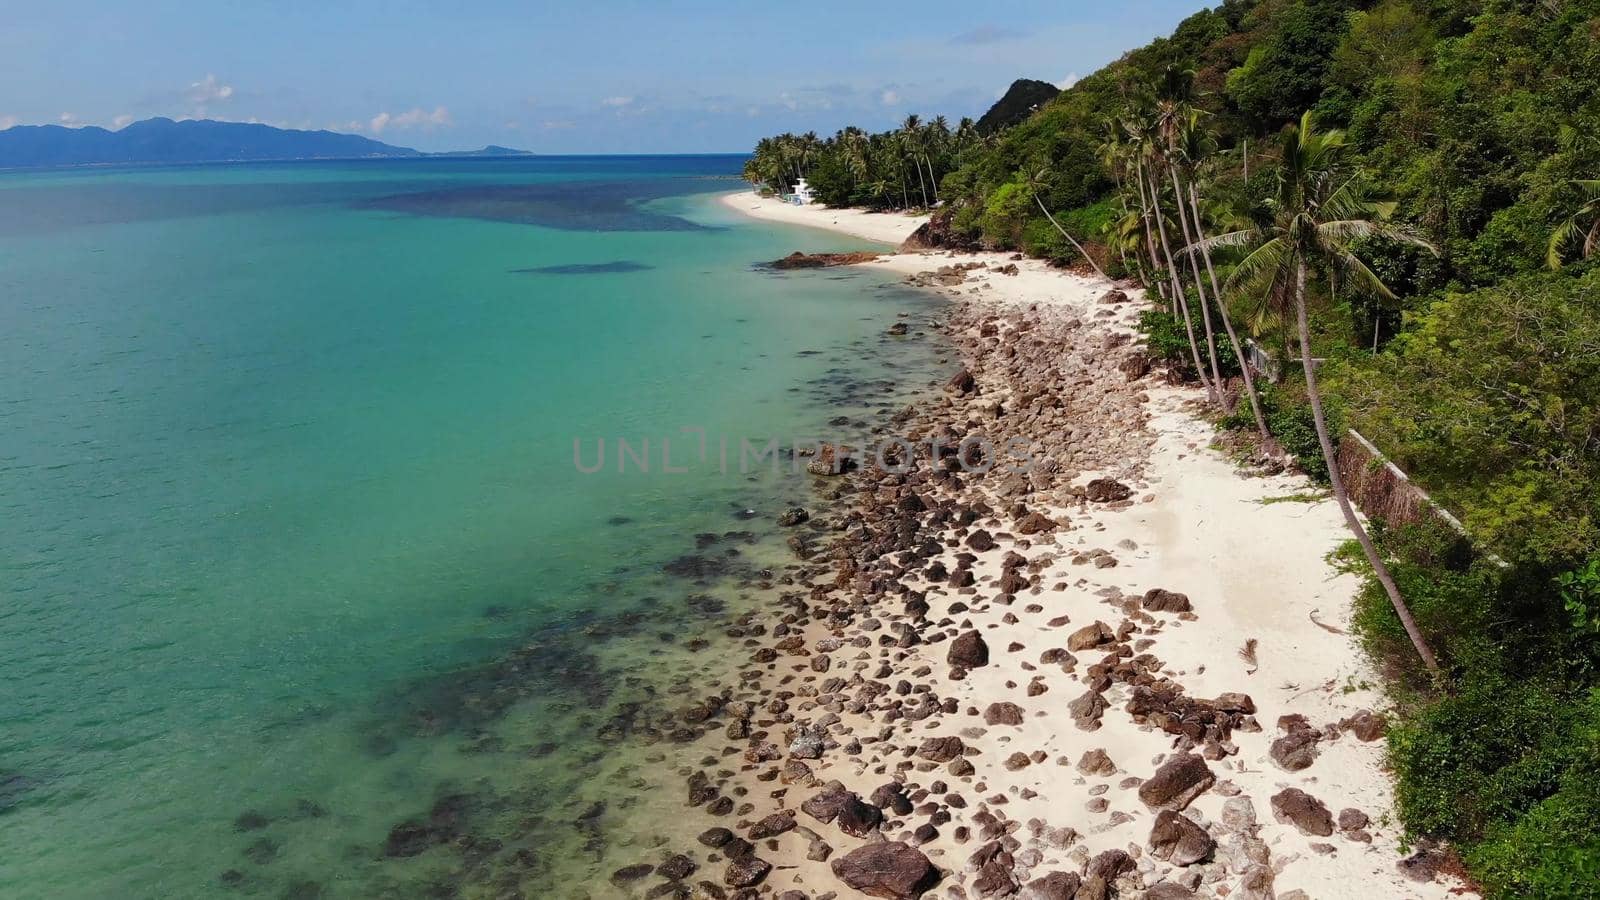 Green jungle and stony beach near sea. Tropical rainforest and rocks near calm blue sea on white sandy shore of Koh Samui paradise island, Thailand. Dream beach drone view. Relax and holiday concept